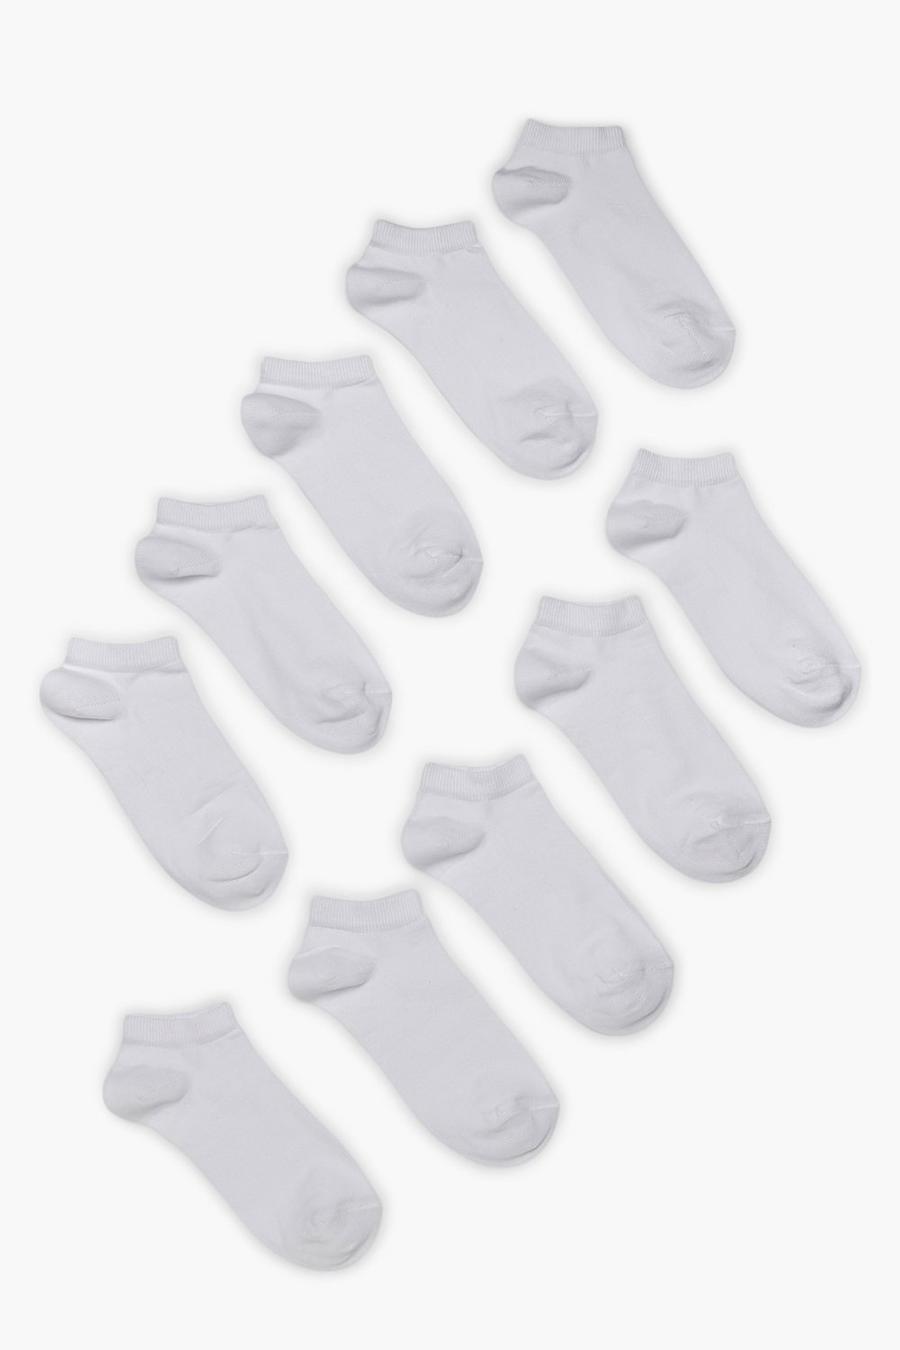 White Sneakers Socks 10 Pack image number 1